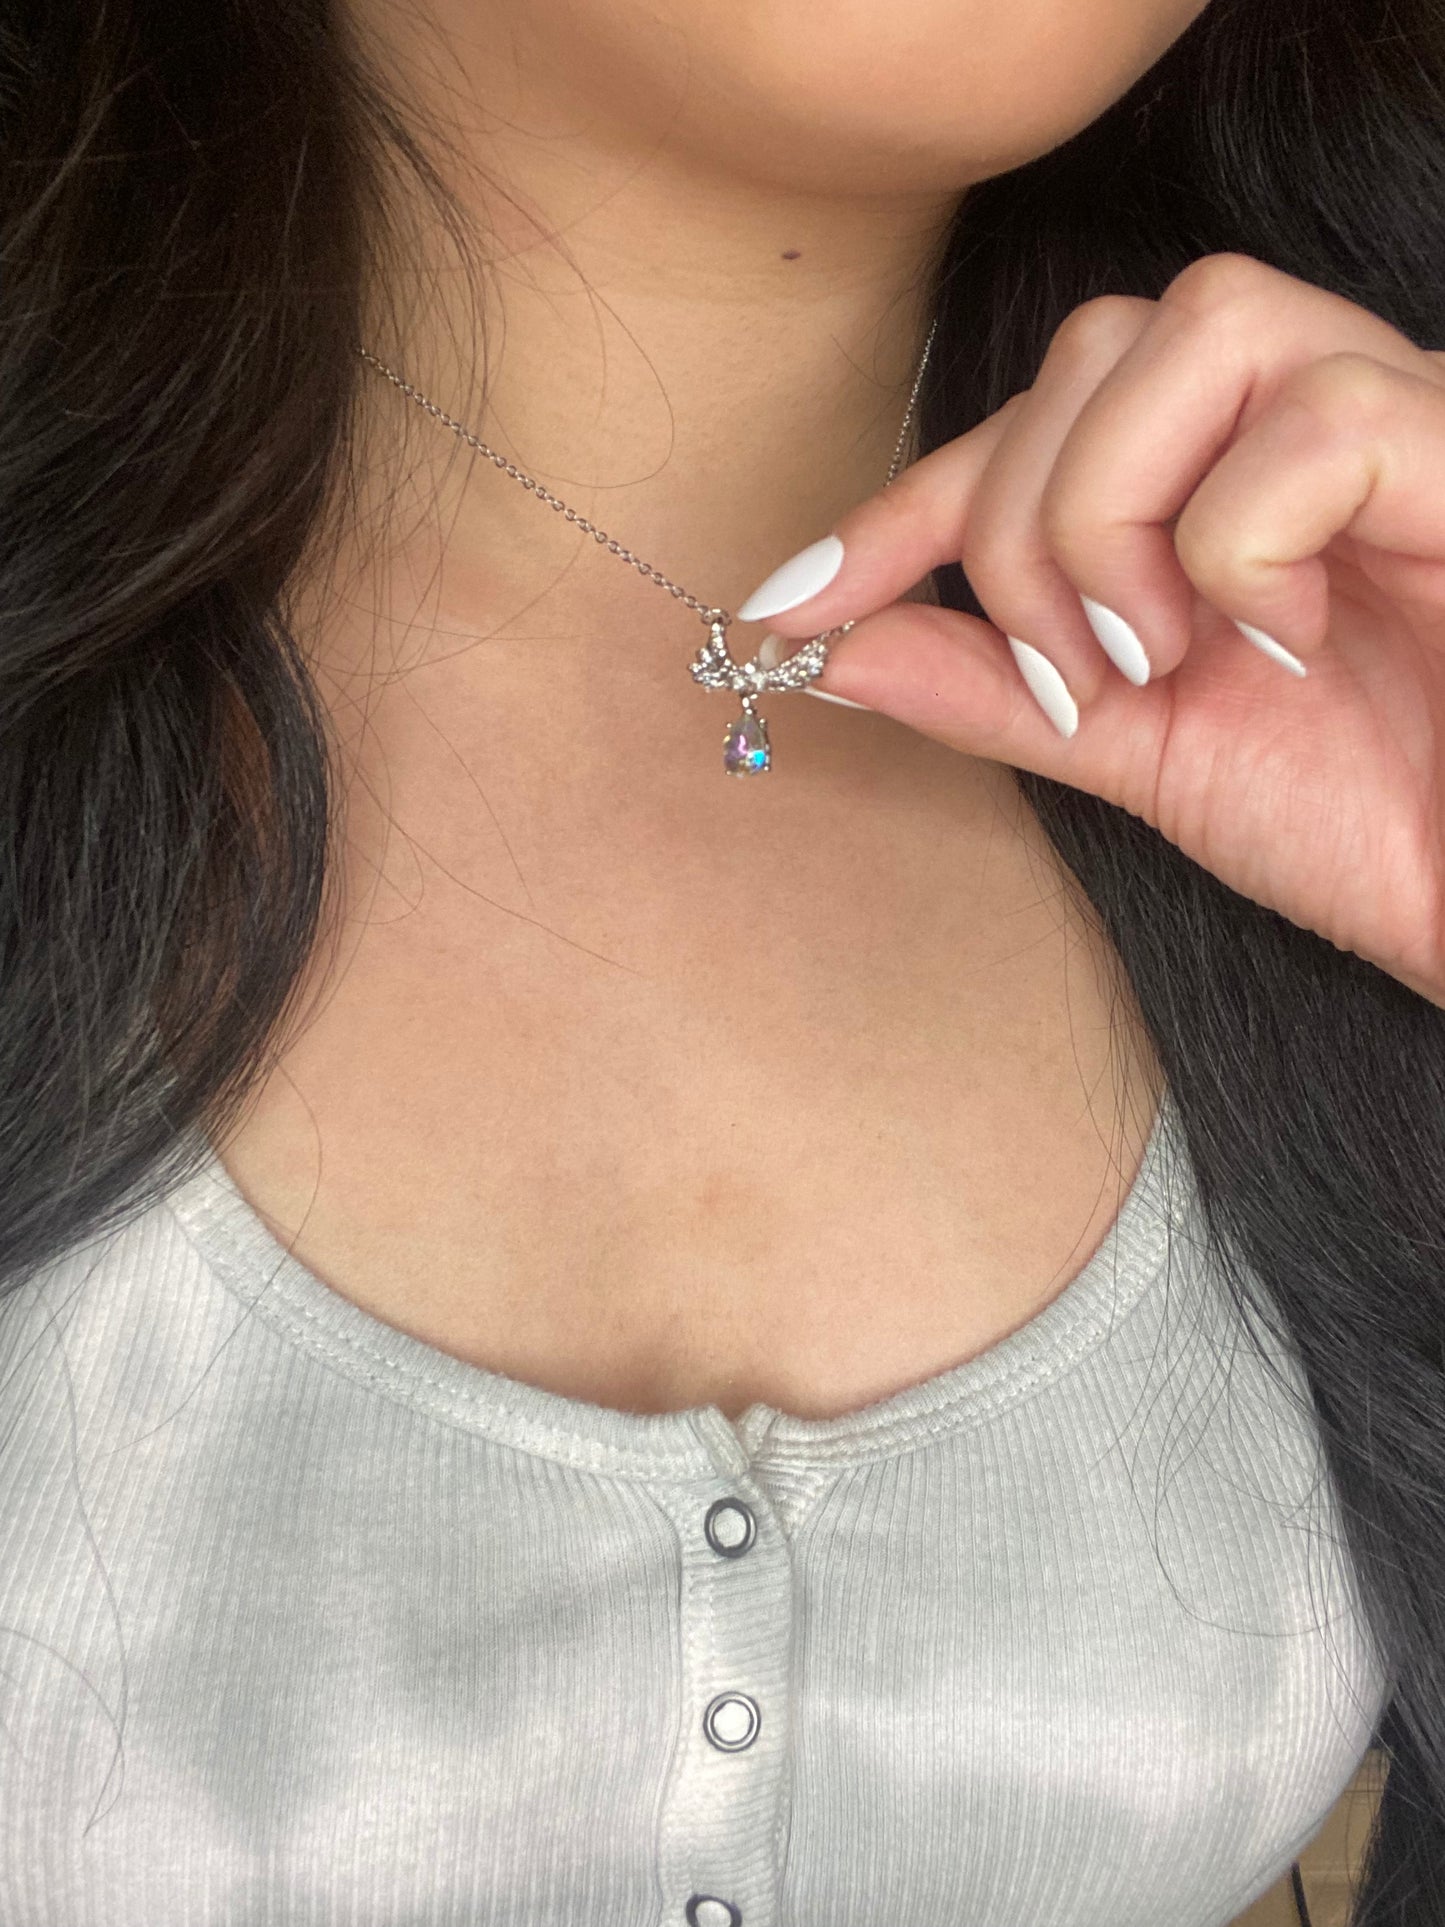 Teardrop Gemstone Silver Necklace